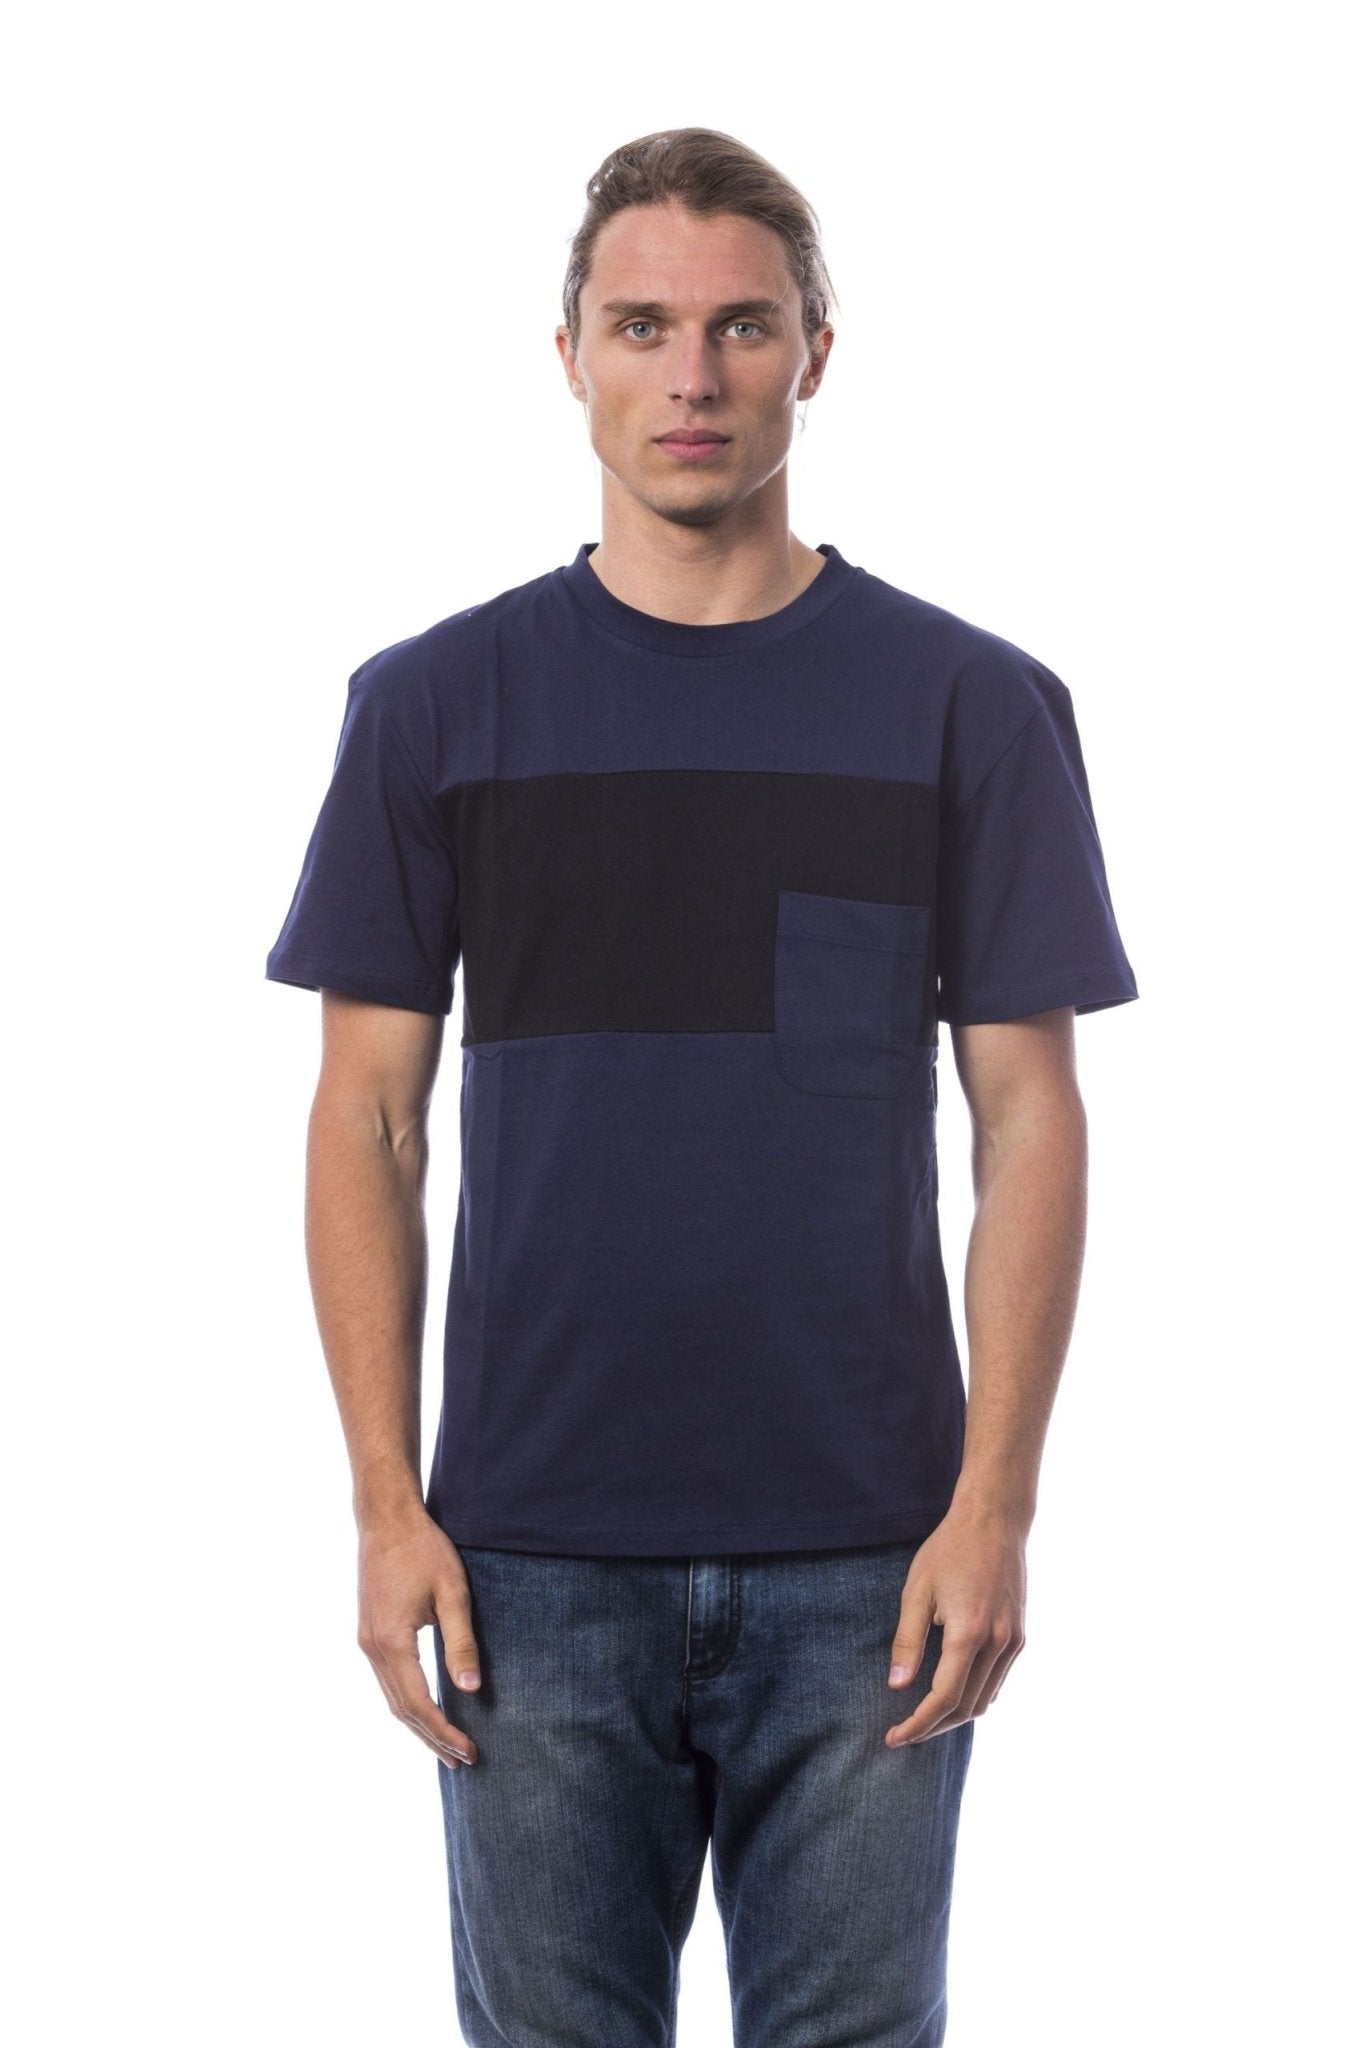 Verri Blue Cotton T-Shirt - Fizigo